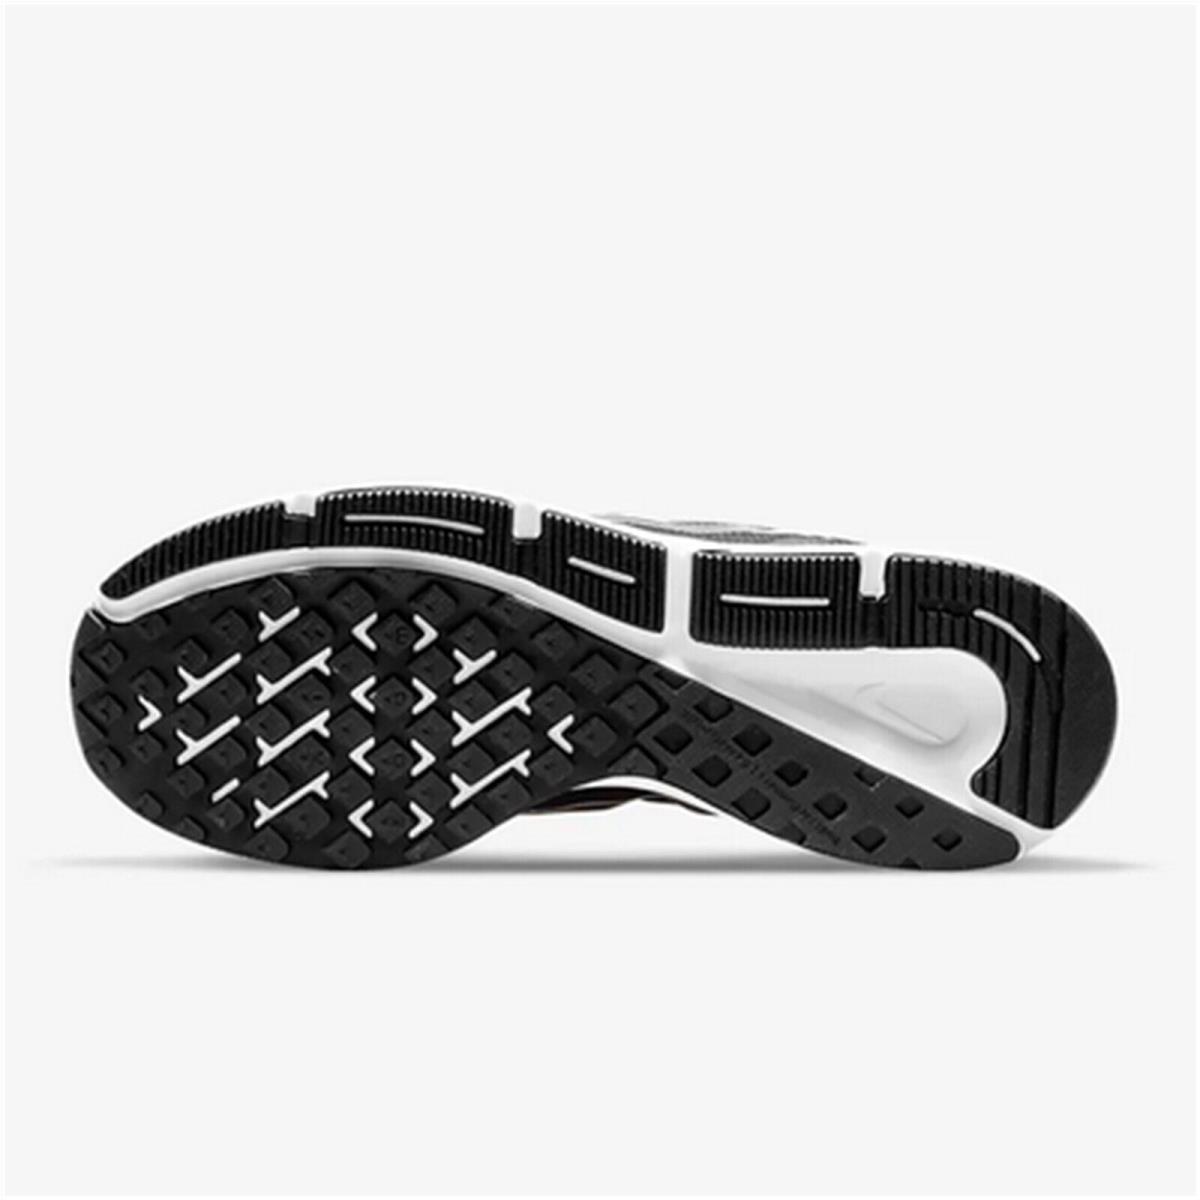 Nike shoes Zoom Span - BLACK/WHITE 2